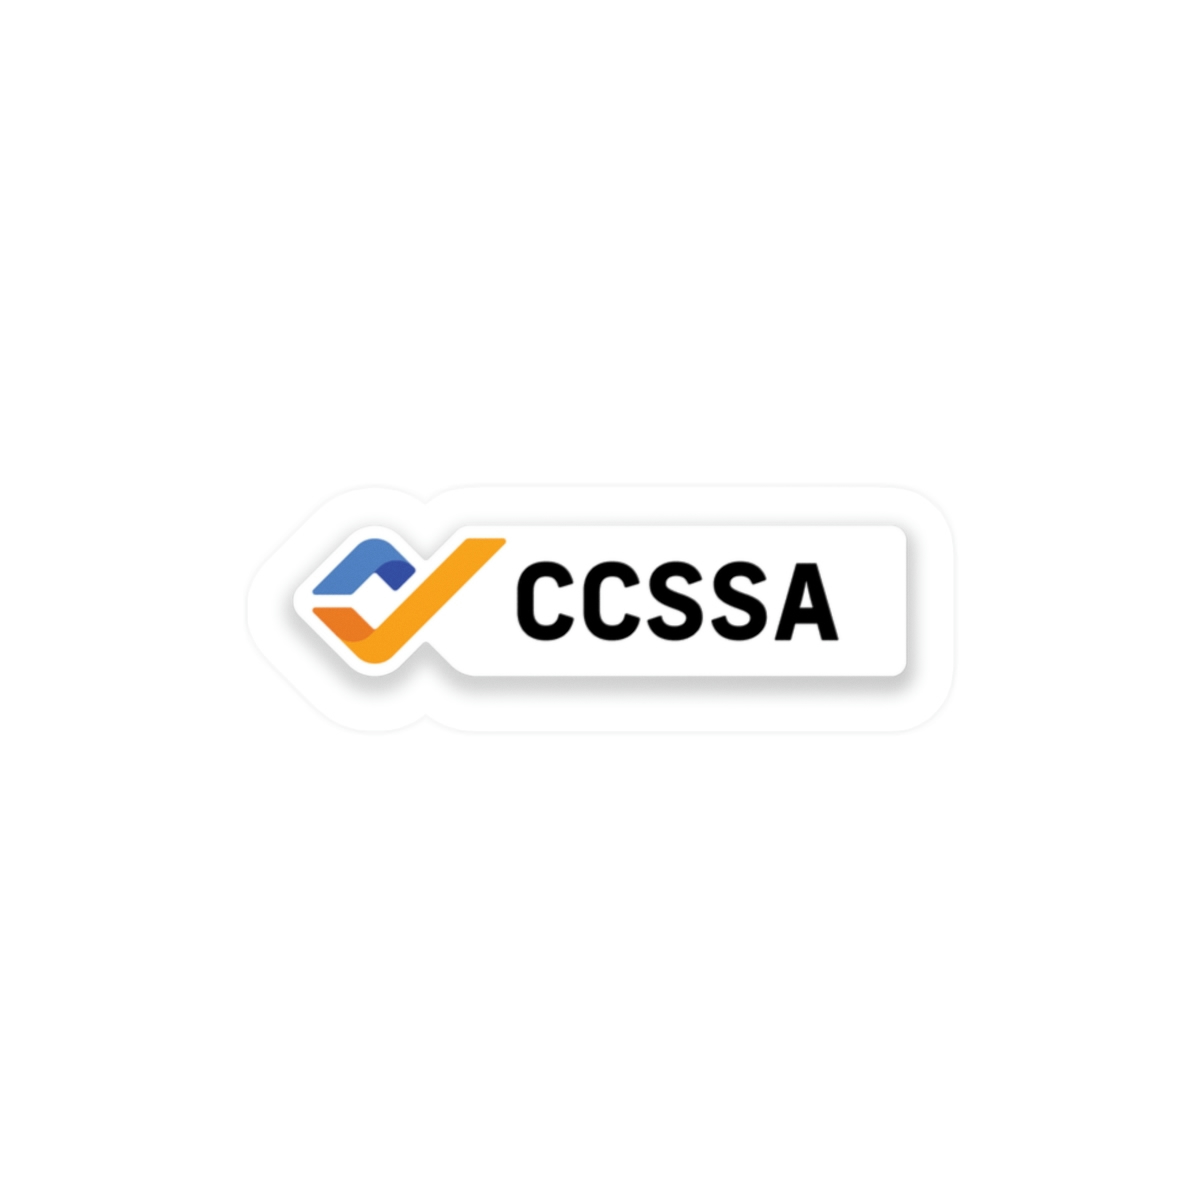 CCSSA exams for RSI